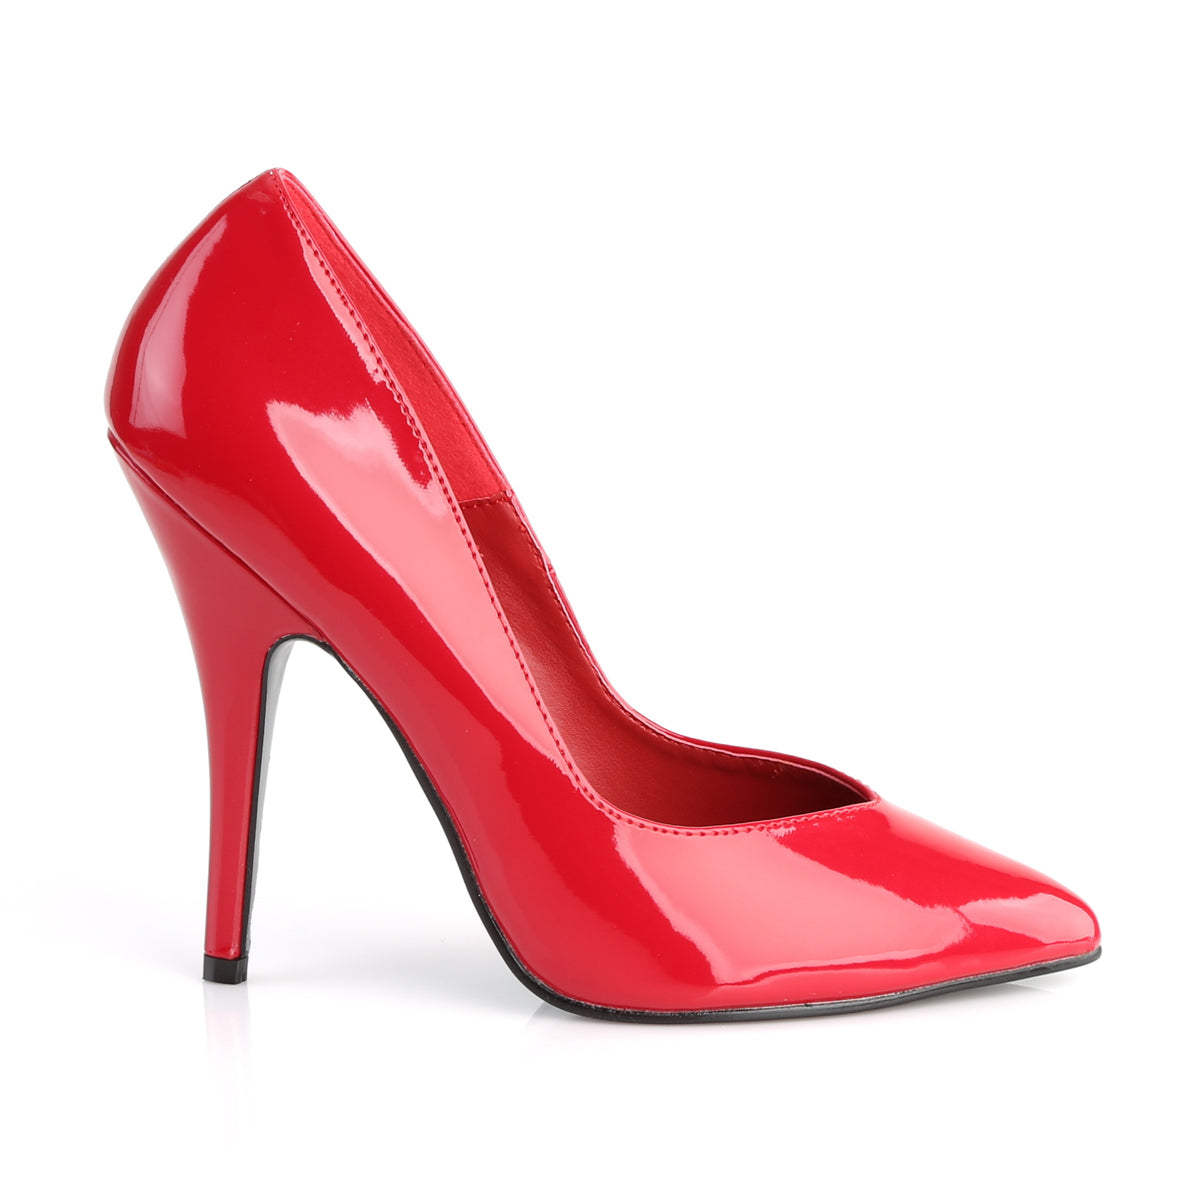 SEDUCE-420V Pleaser Sexy Shoes 5" Heel Red Fetish Footwear-Pleaser- Sexy Shoes Fetish Heels